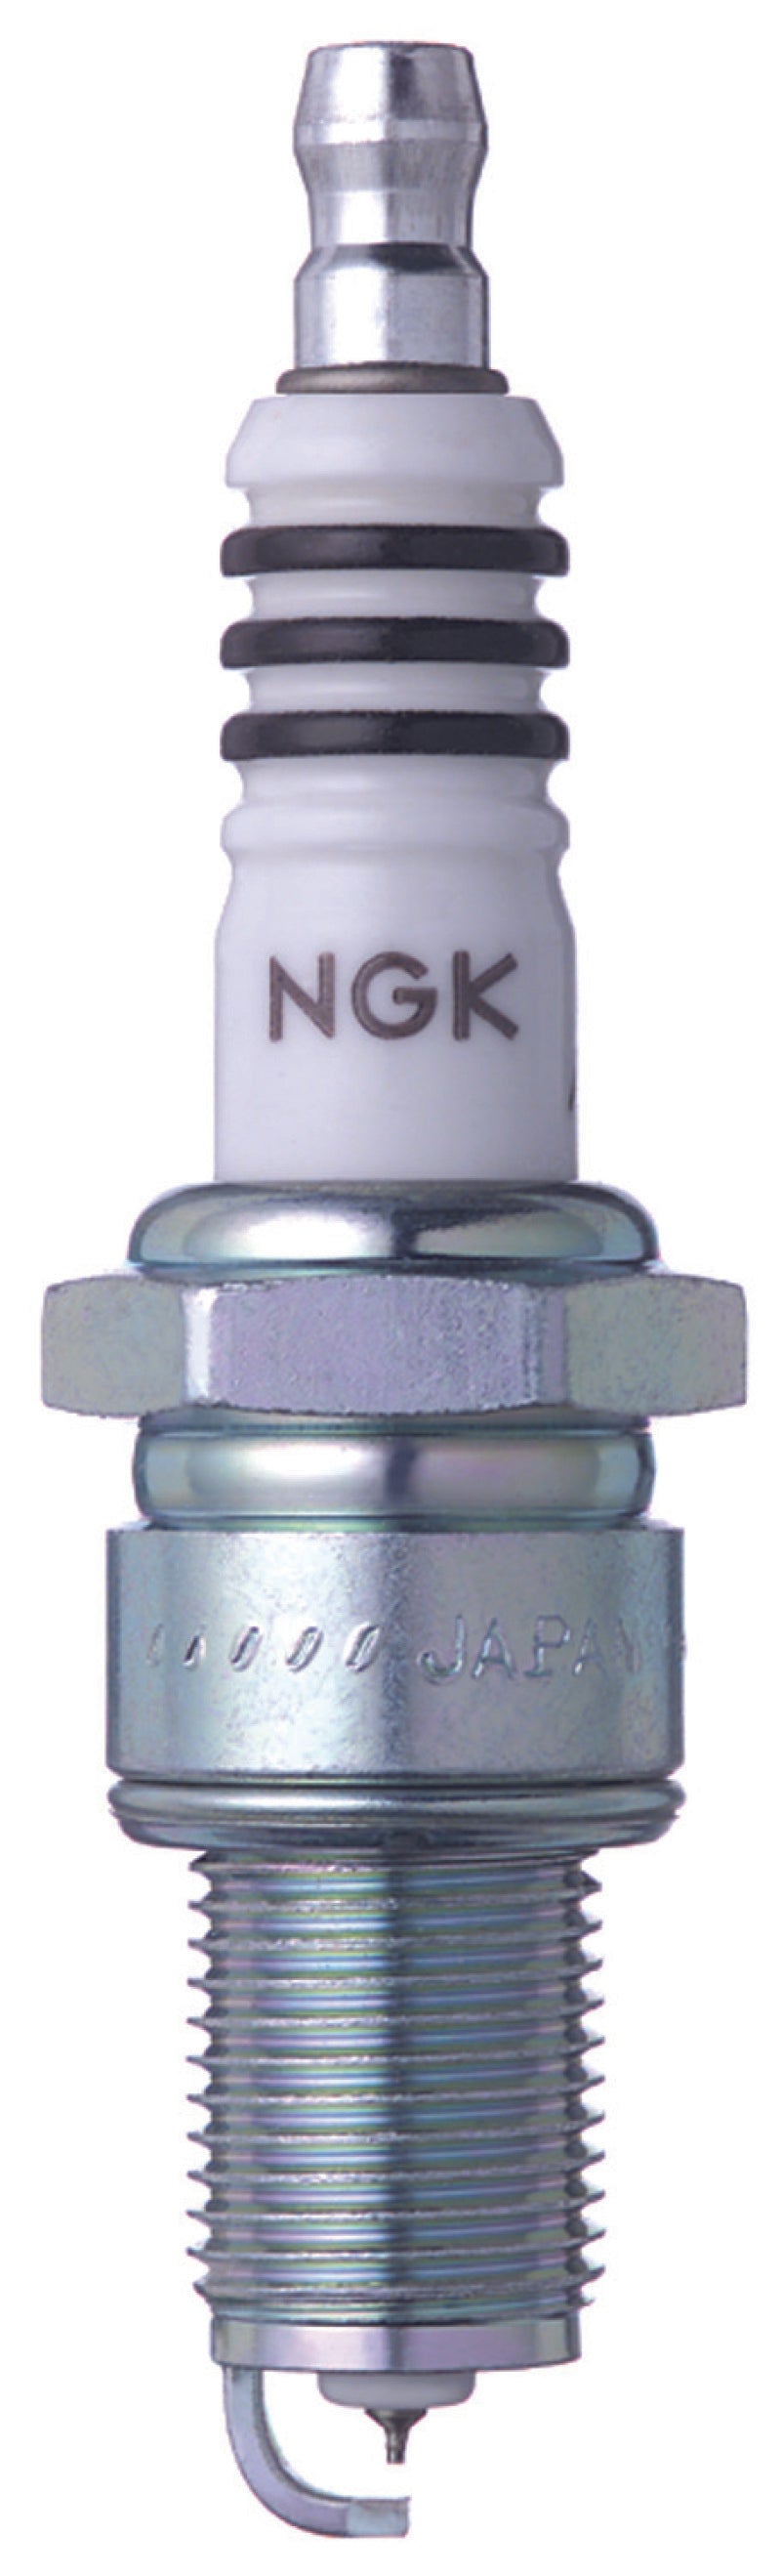 NGK IX Iridium Spark Plug Box of 4 (BPR9EIX) -  Shop now at Performance Car Parts